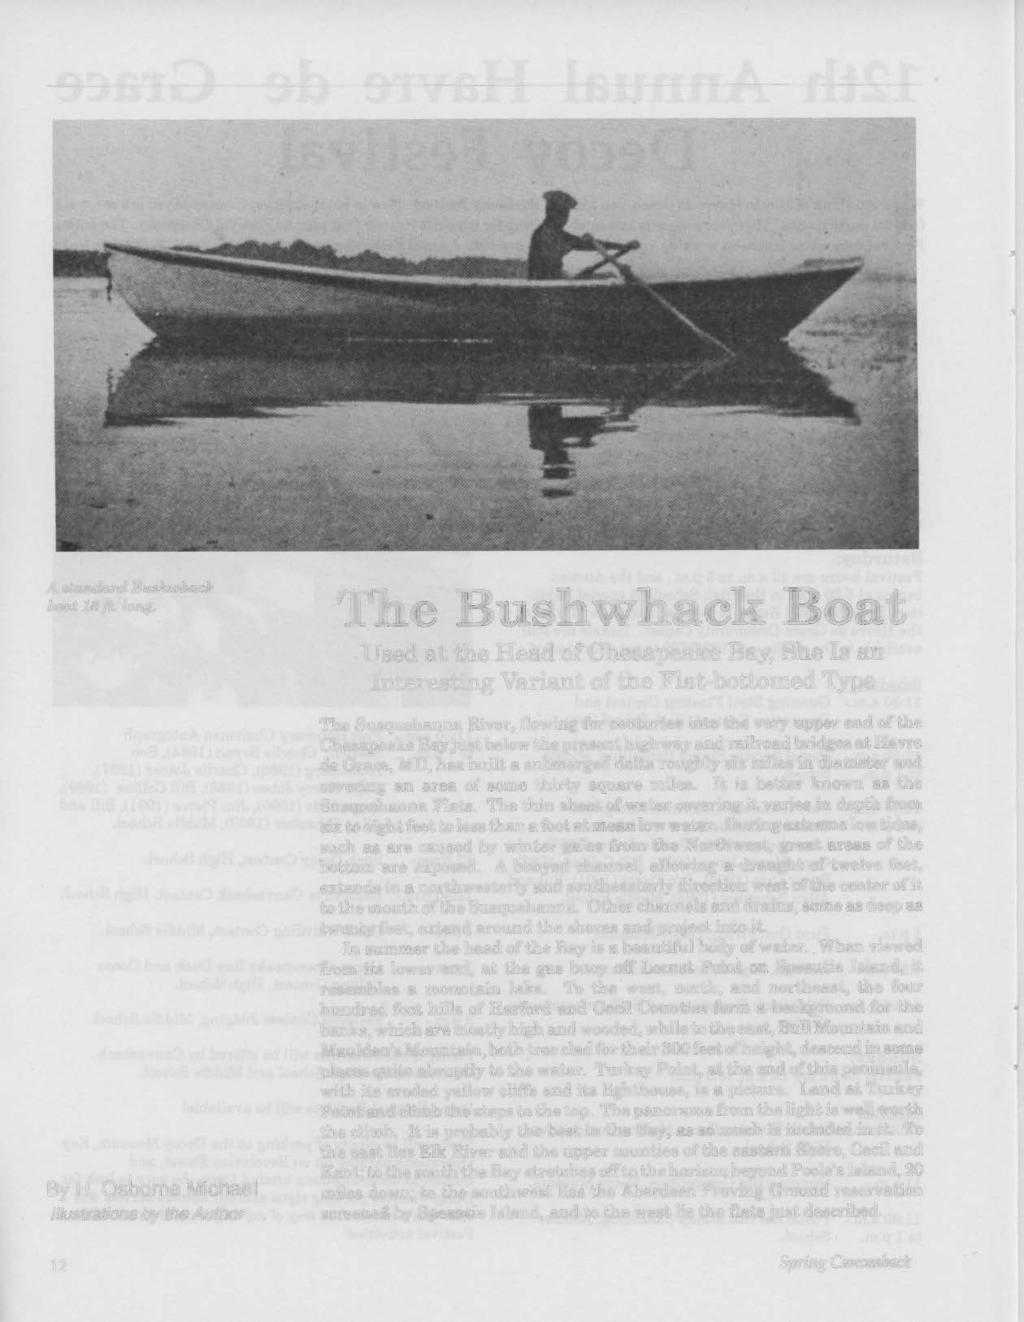 A standard Bushwhack boat 18 ft. long. By H.